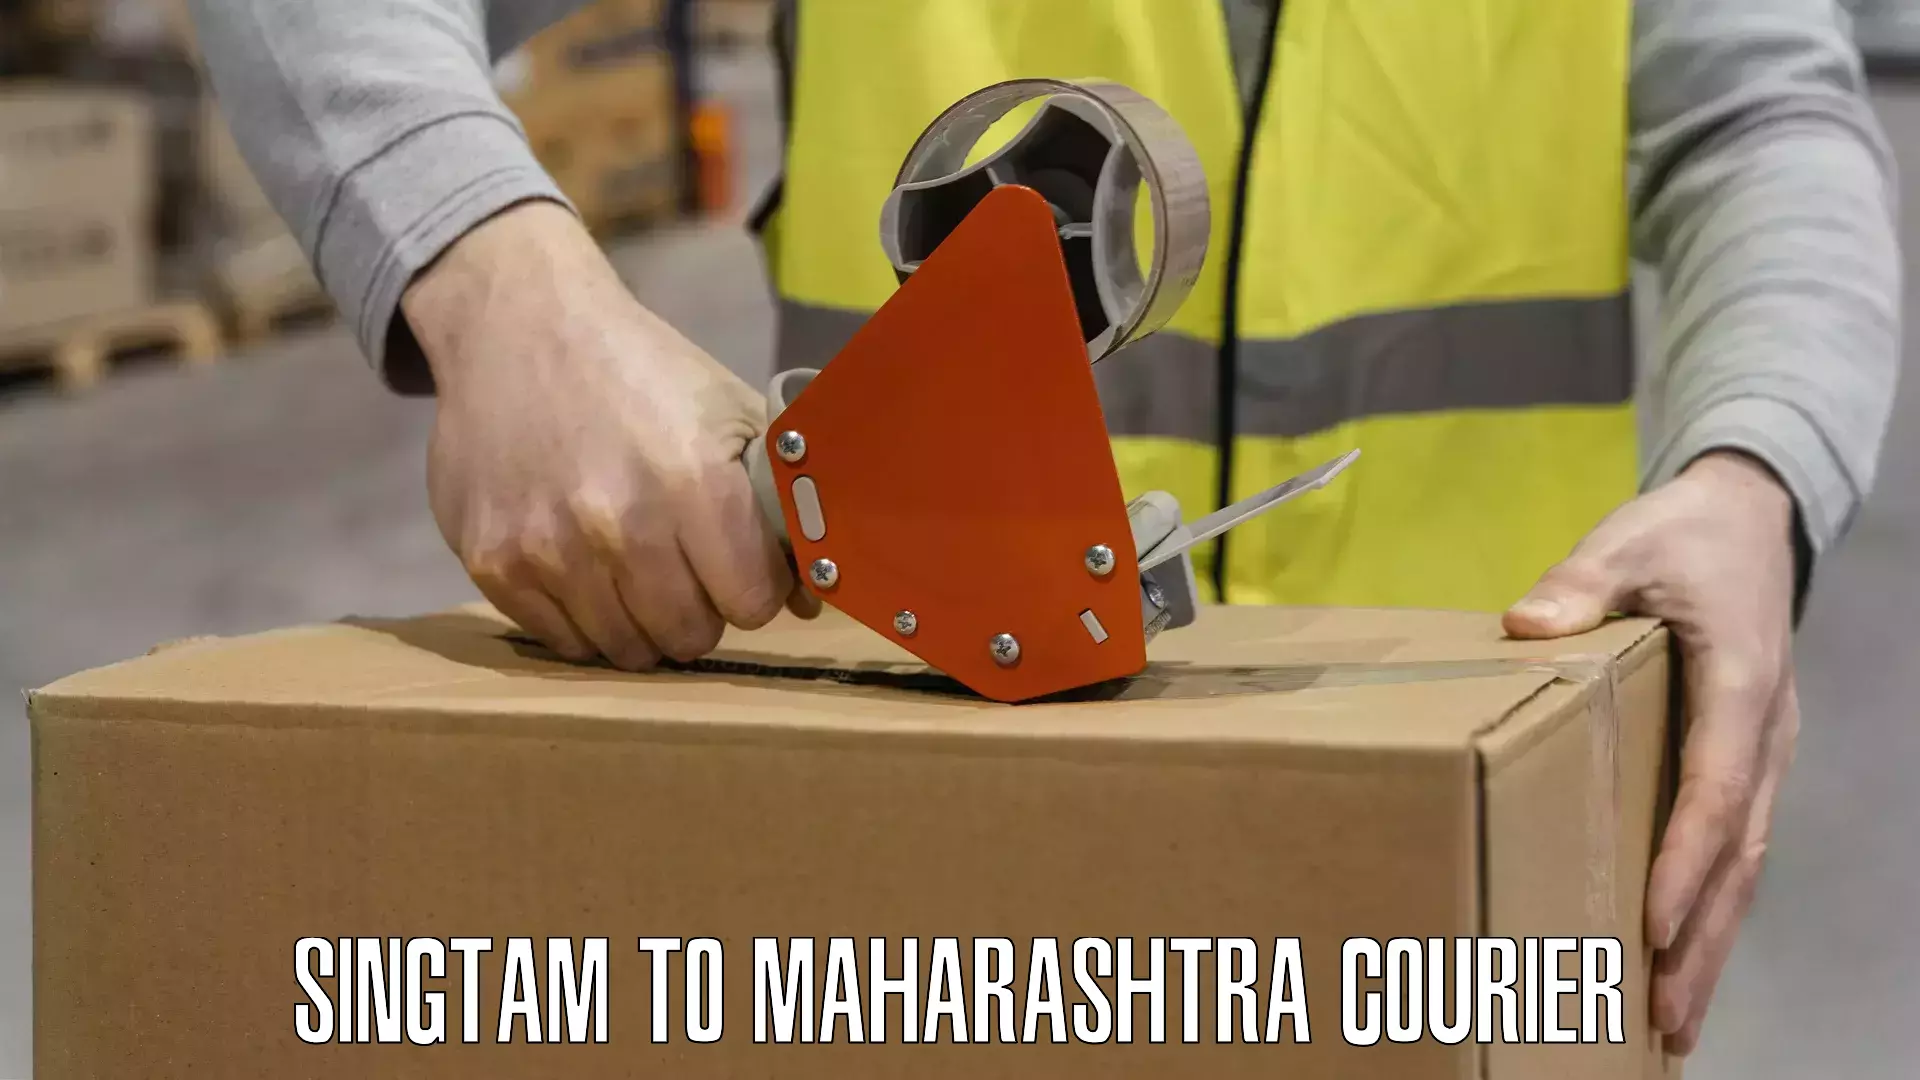 Customizable delivery plans Singtam to Maharashtra